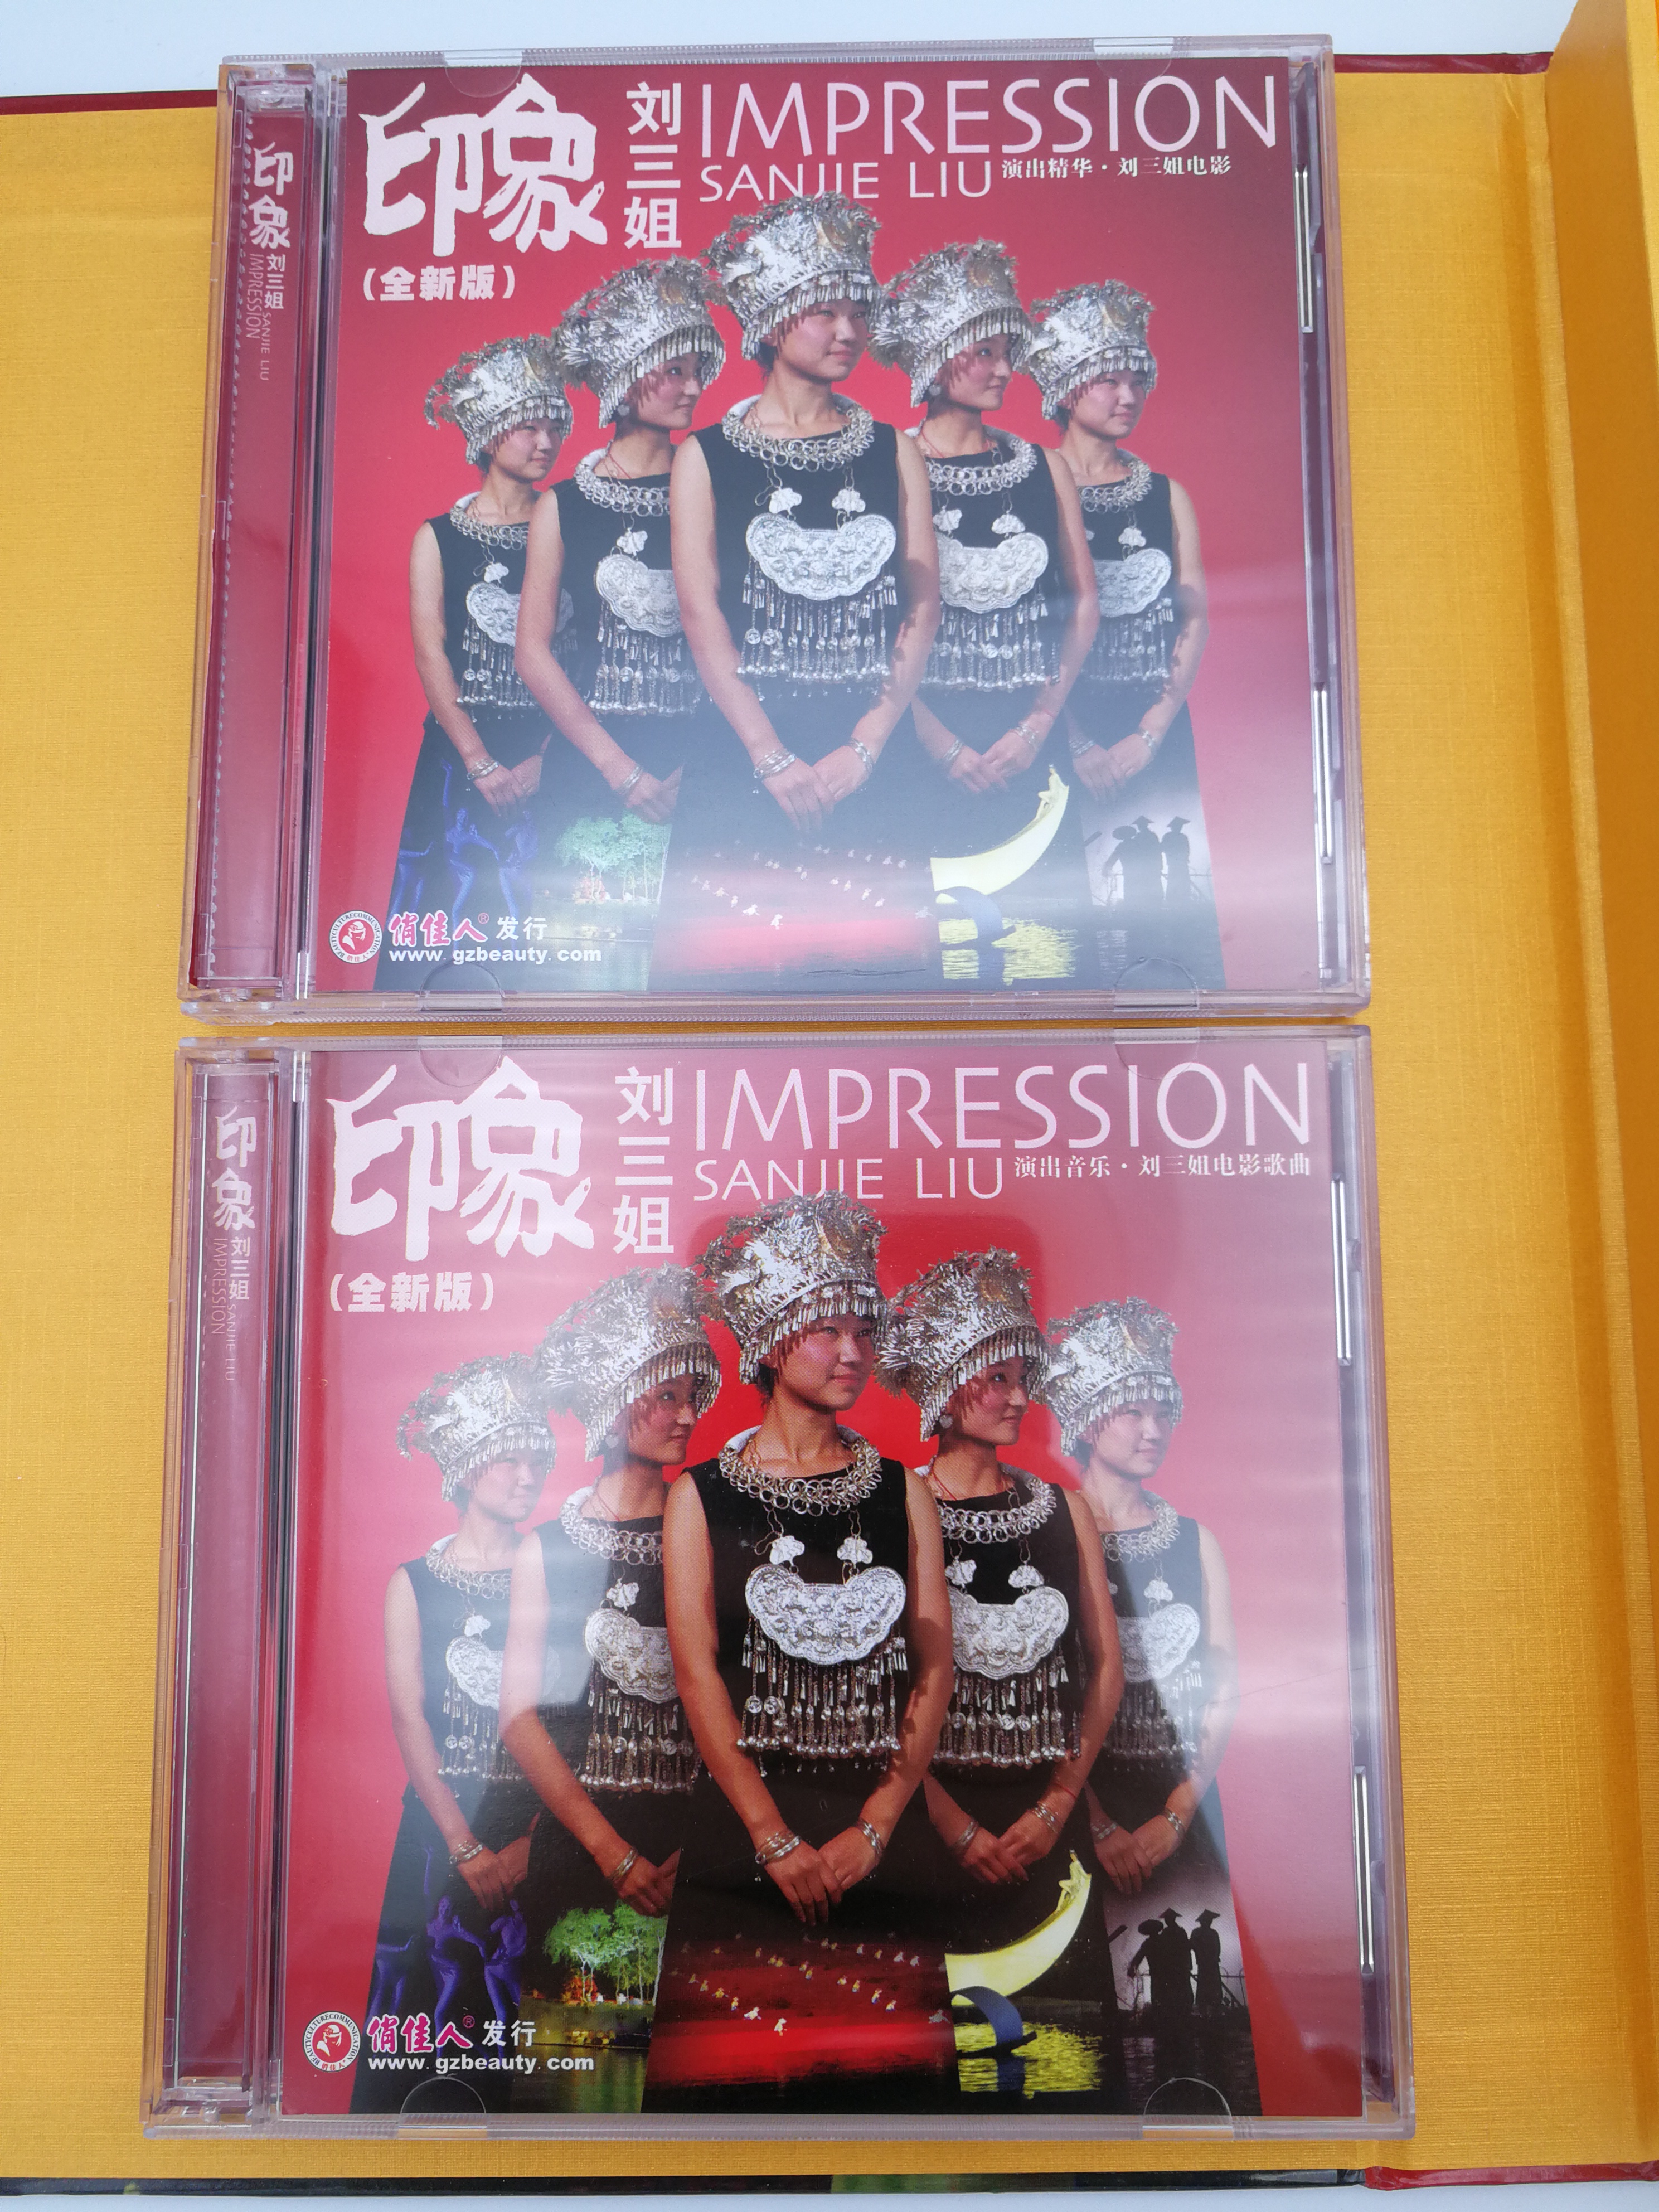 Sanjie Liu - Impression 2x DVD 2CD 1